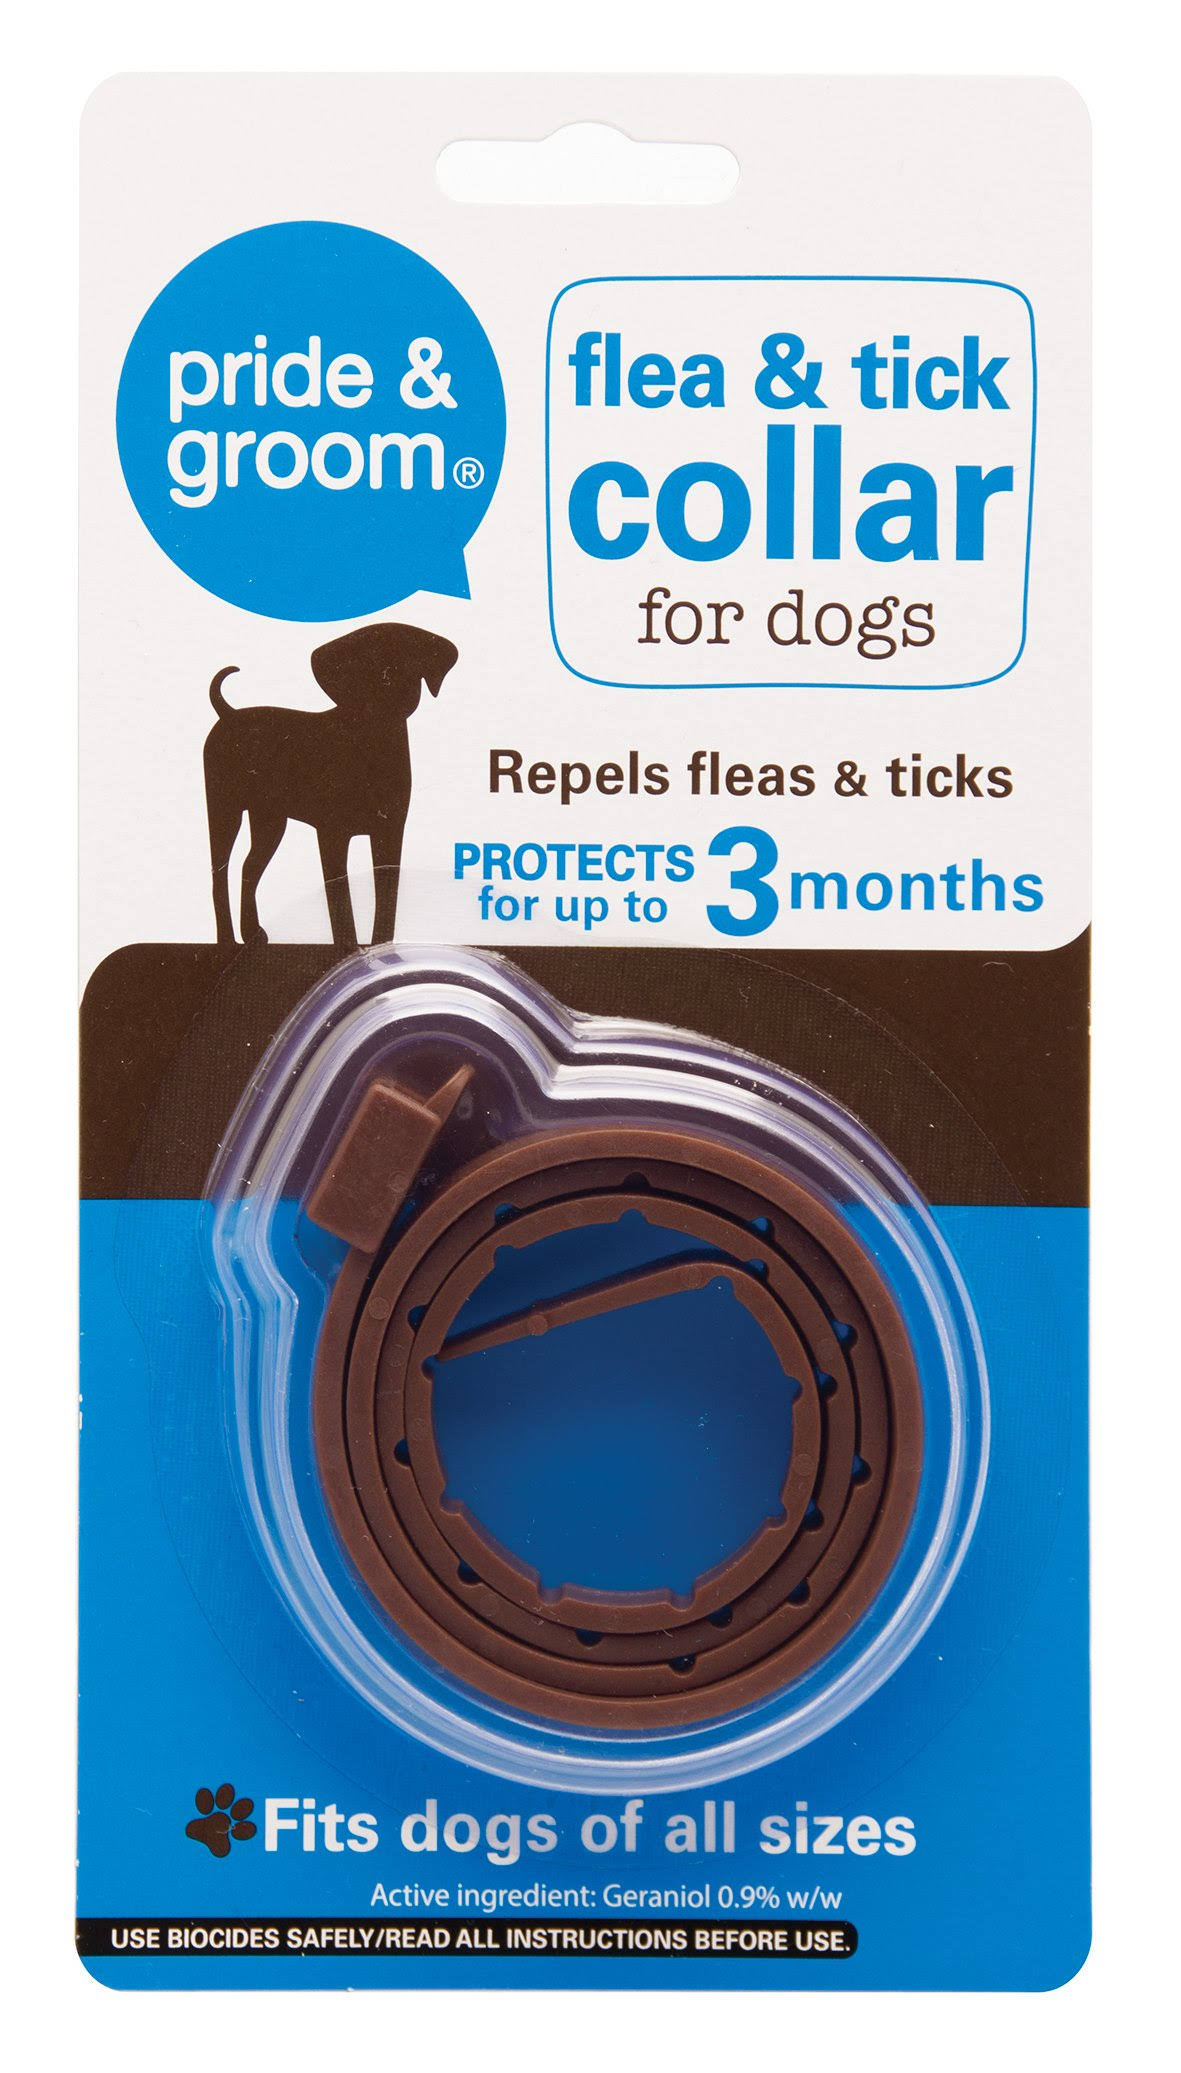 Pride & Groom Flea & Tick Collar for Dogs